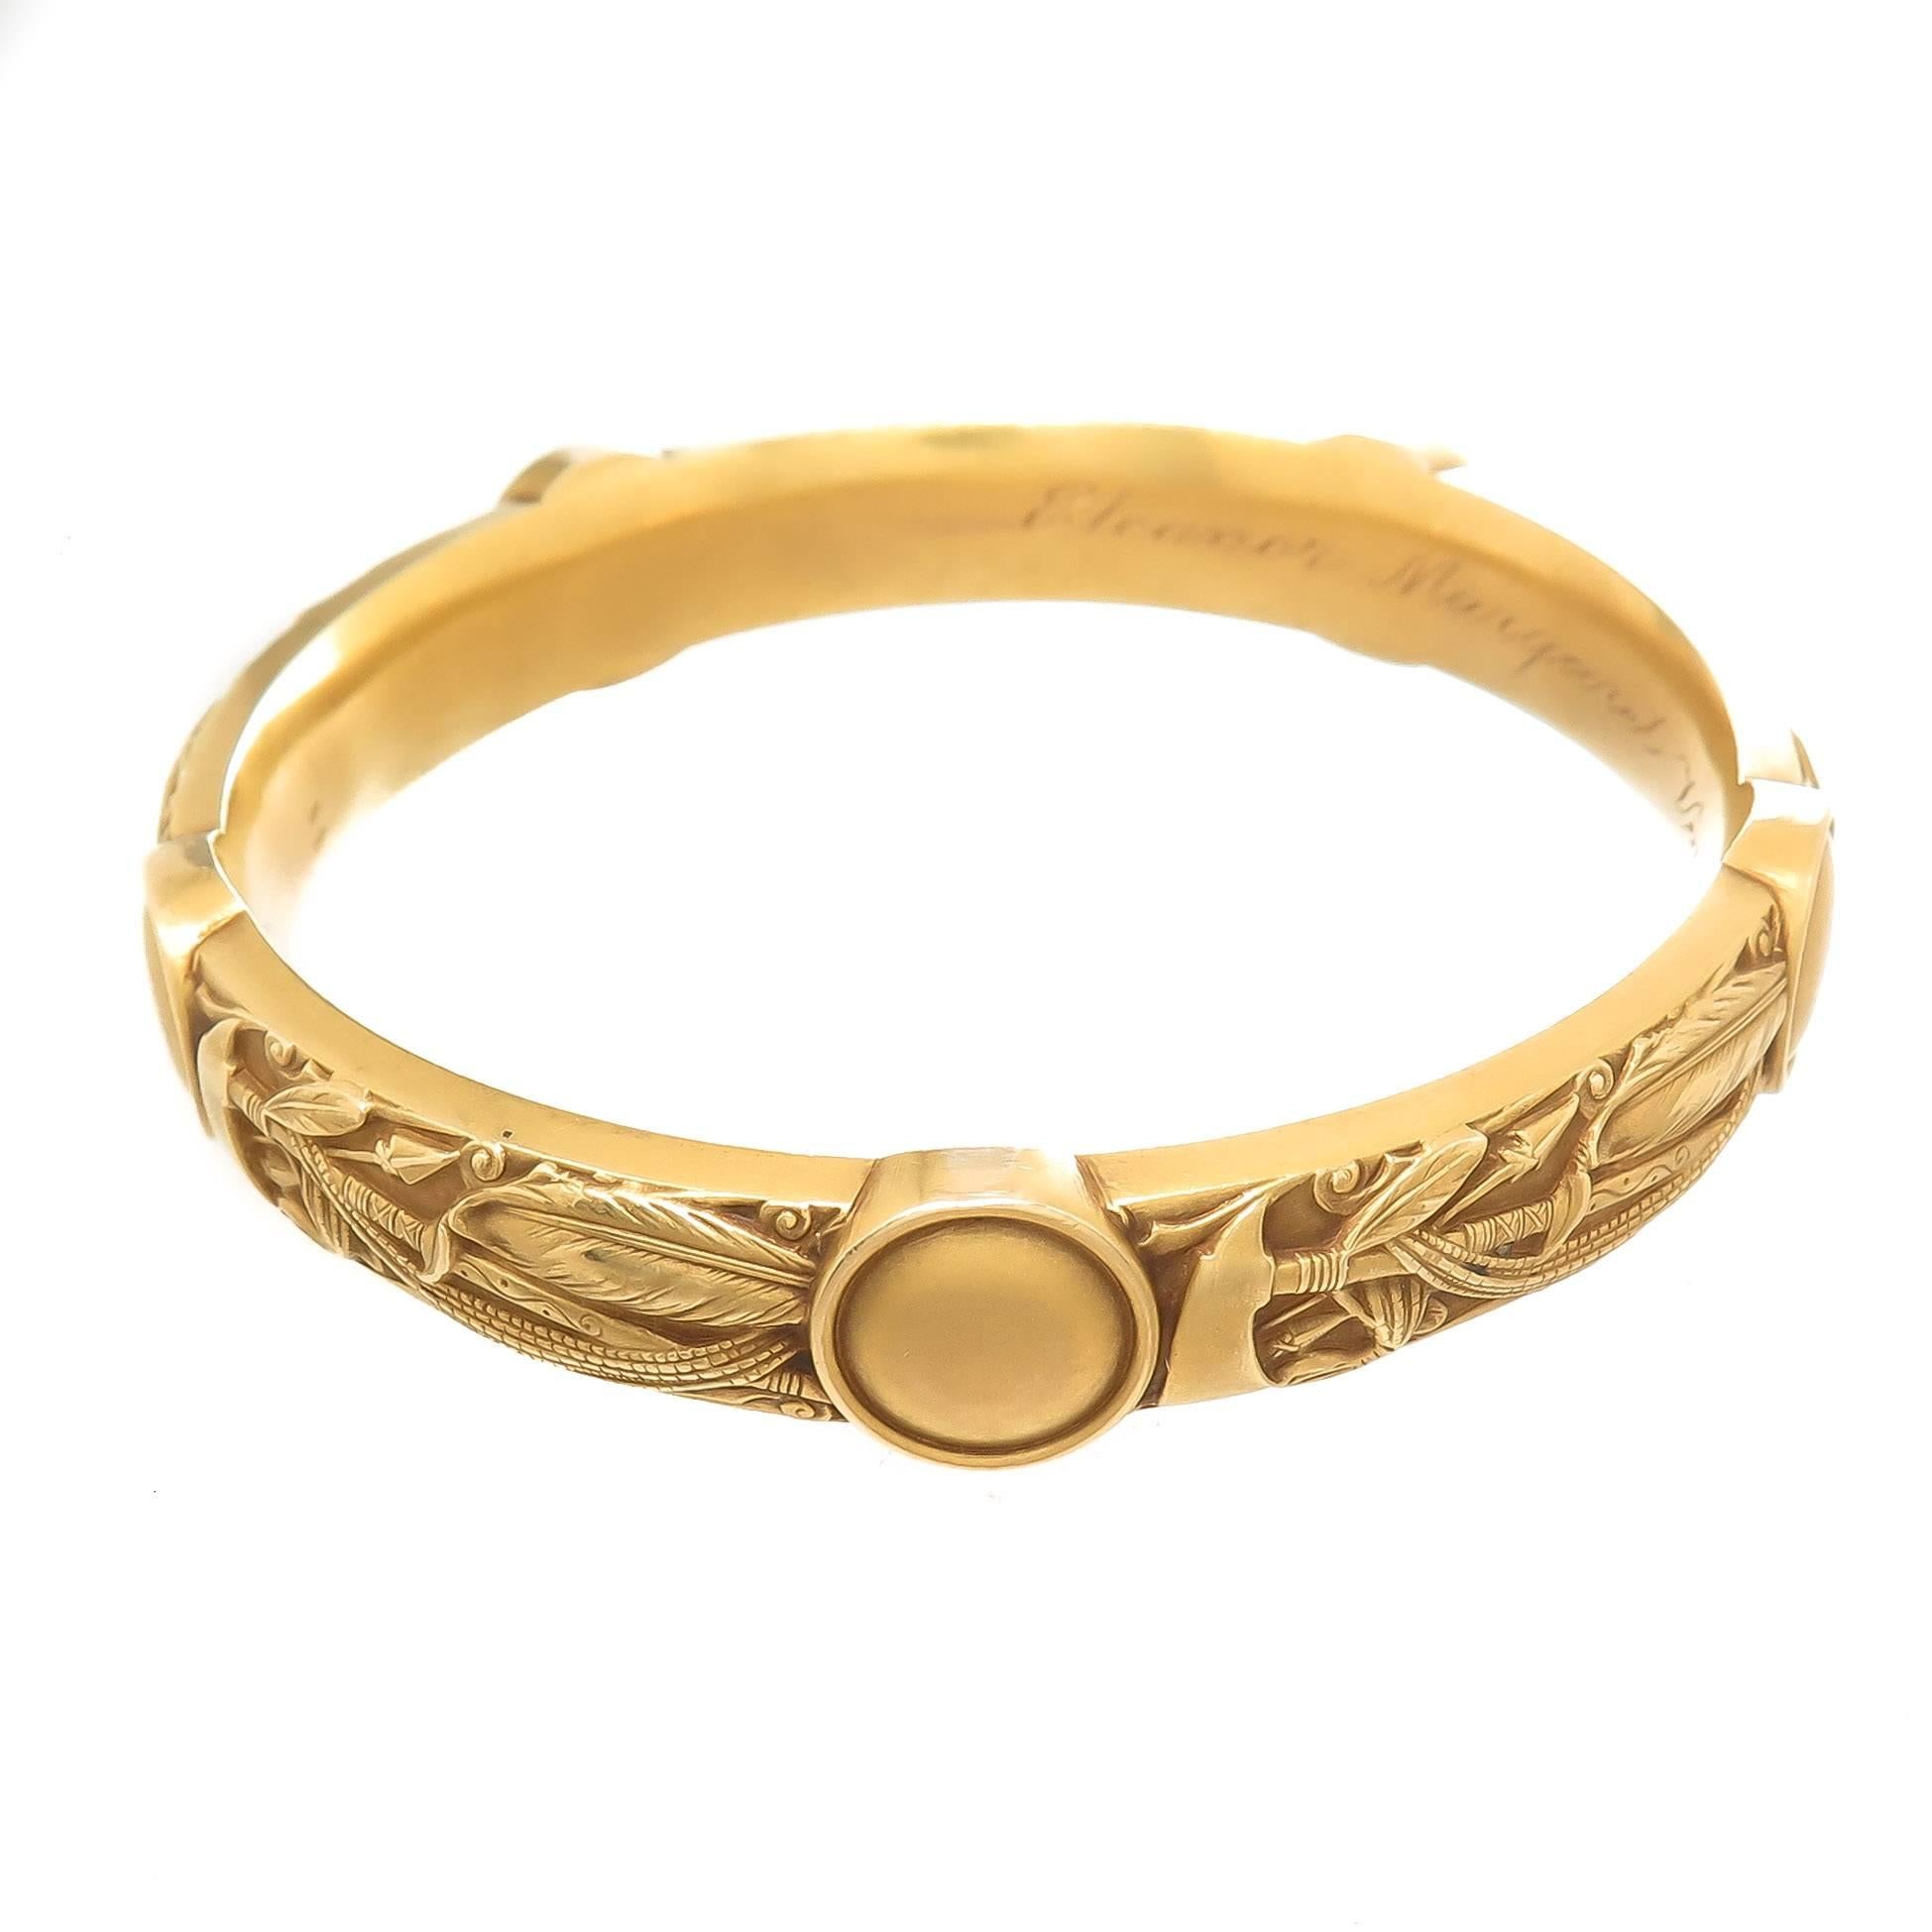 Riker Brothers Art Nouveau 18 Karat Gold Native American Theme Bangle Bracelet